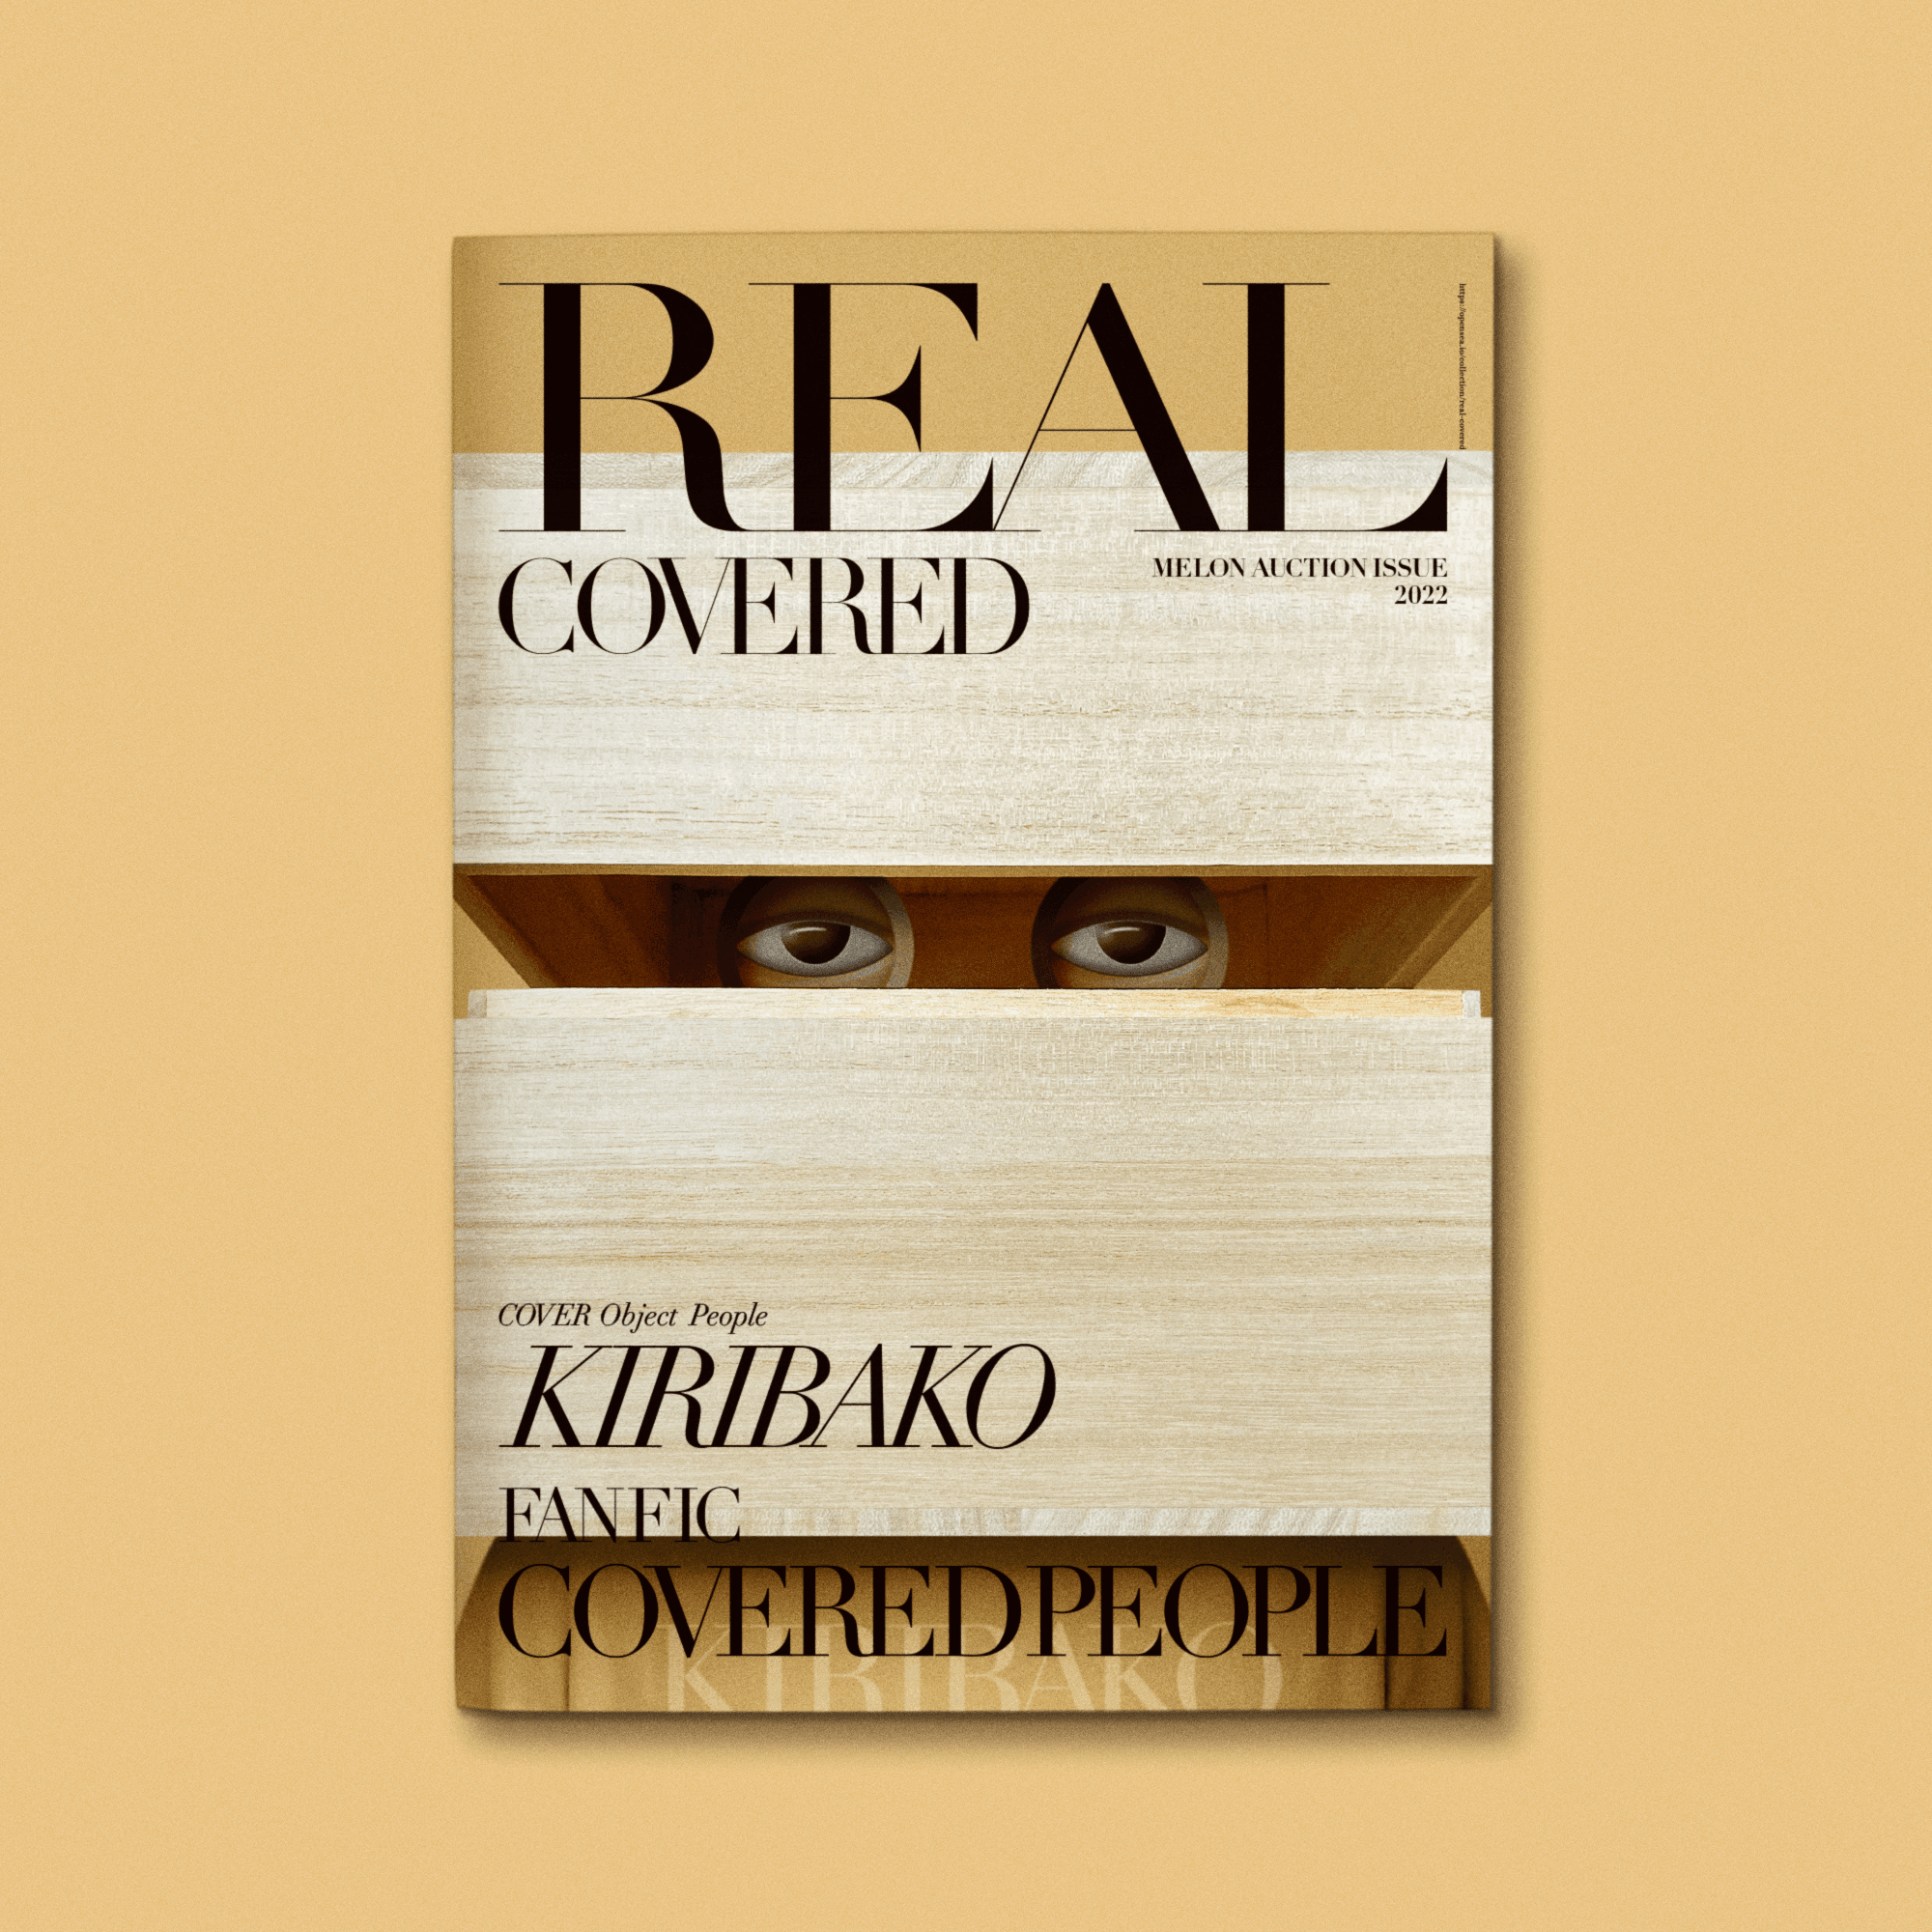 REAL COVERED MAGAZINE KIRIBAKO - MELON AUCTION ISSUE 2022 -